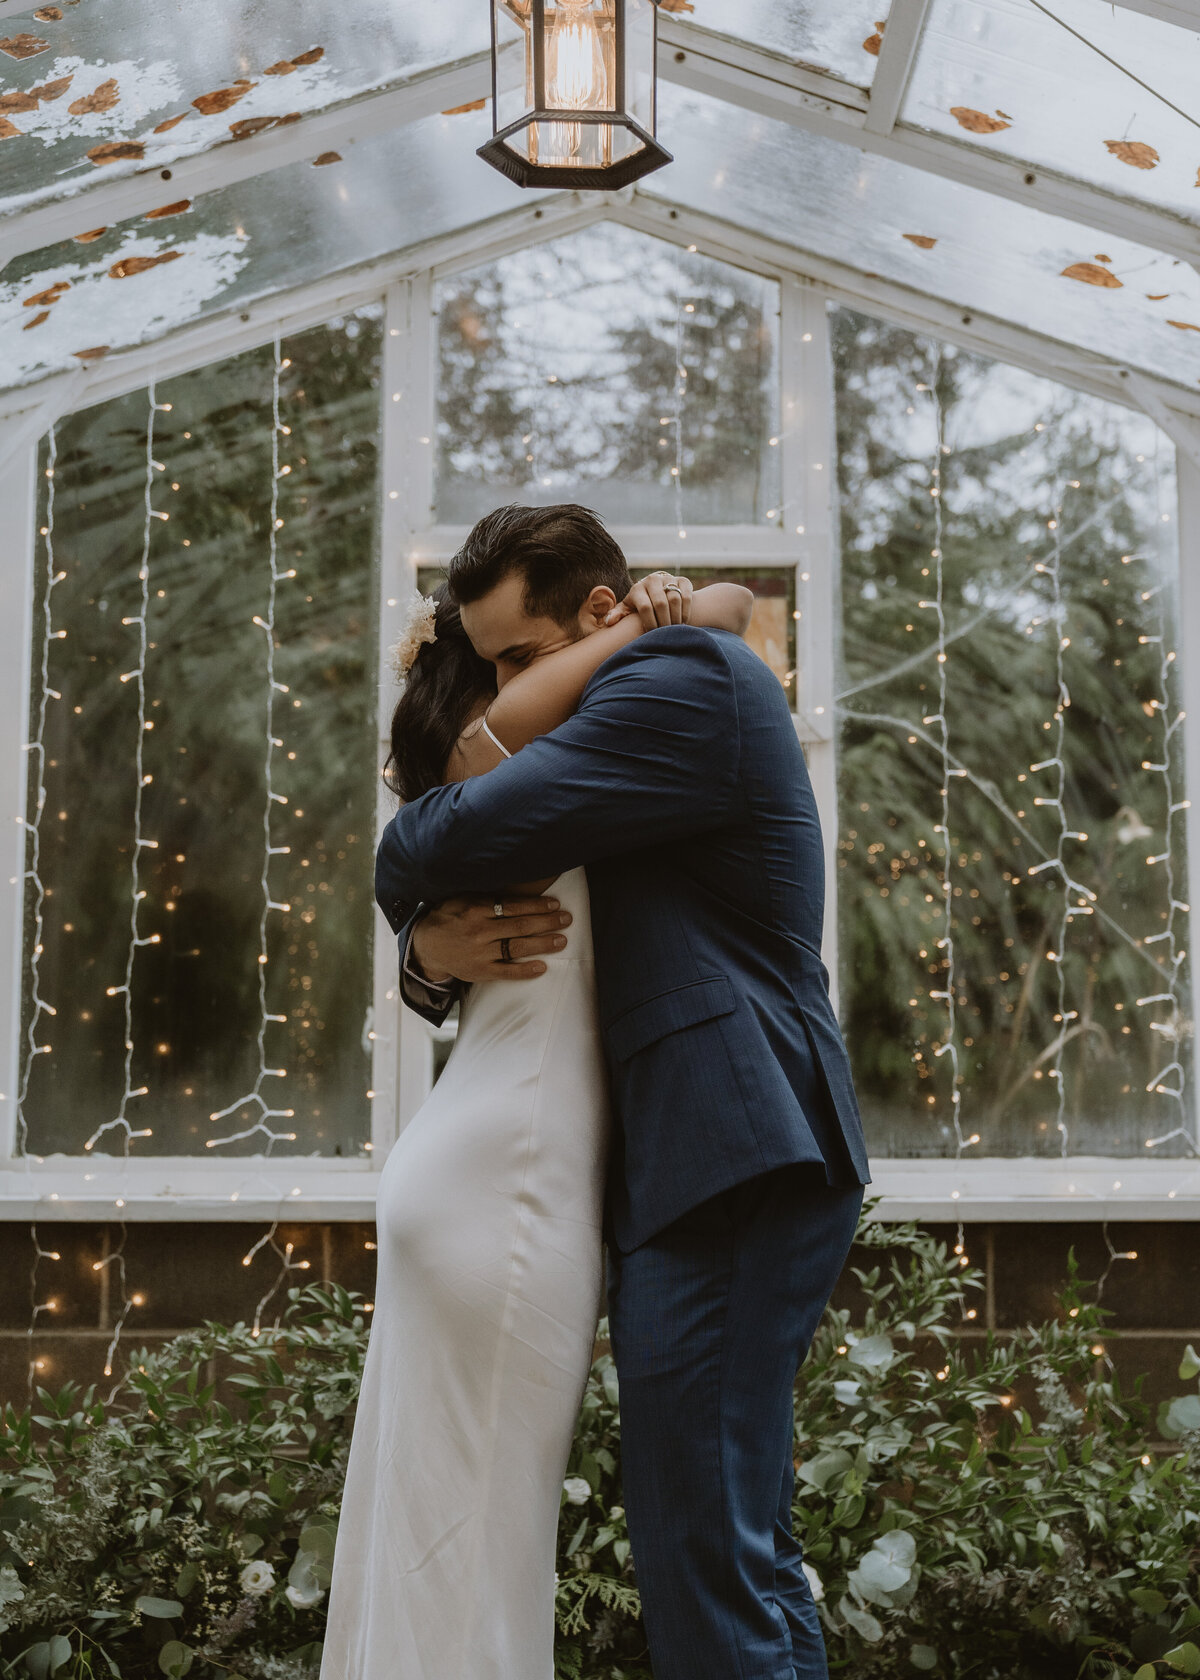 Intimate Winter Elopement in Gastown, Canada | BC Wedding Photographer